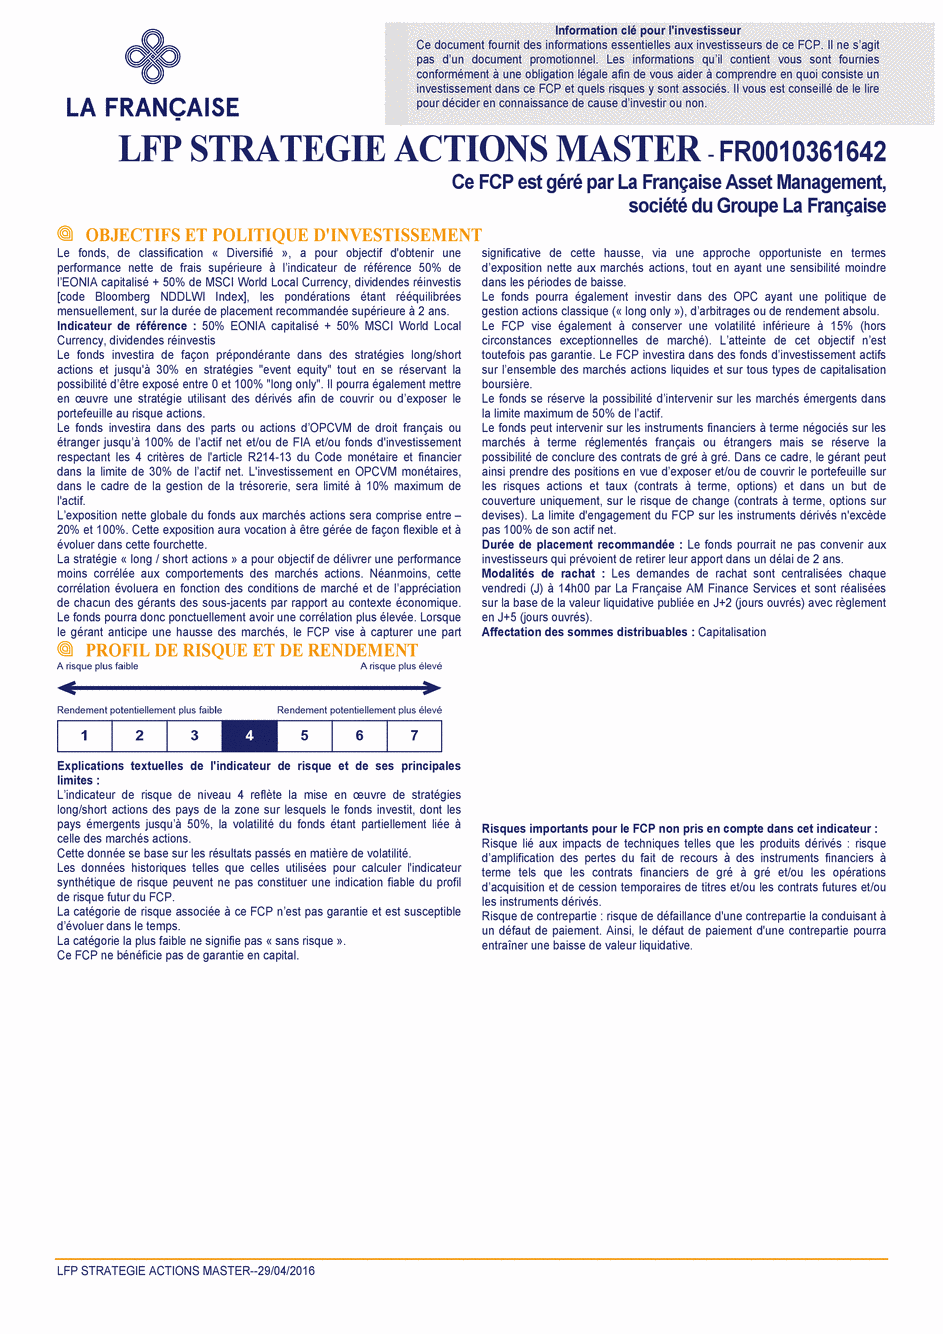 DICI LFP Strategie Actions Master - 29/04/2016 - Français